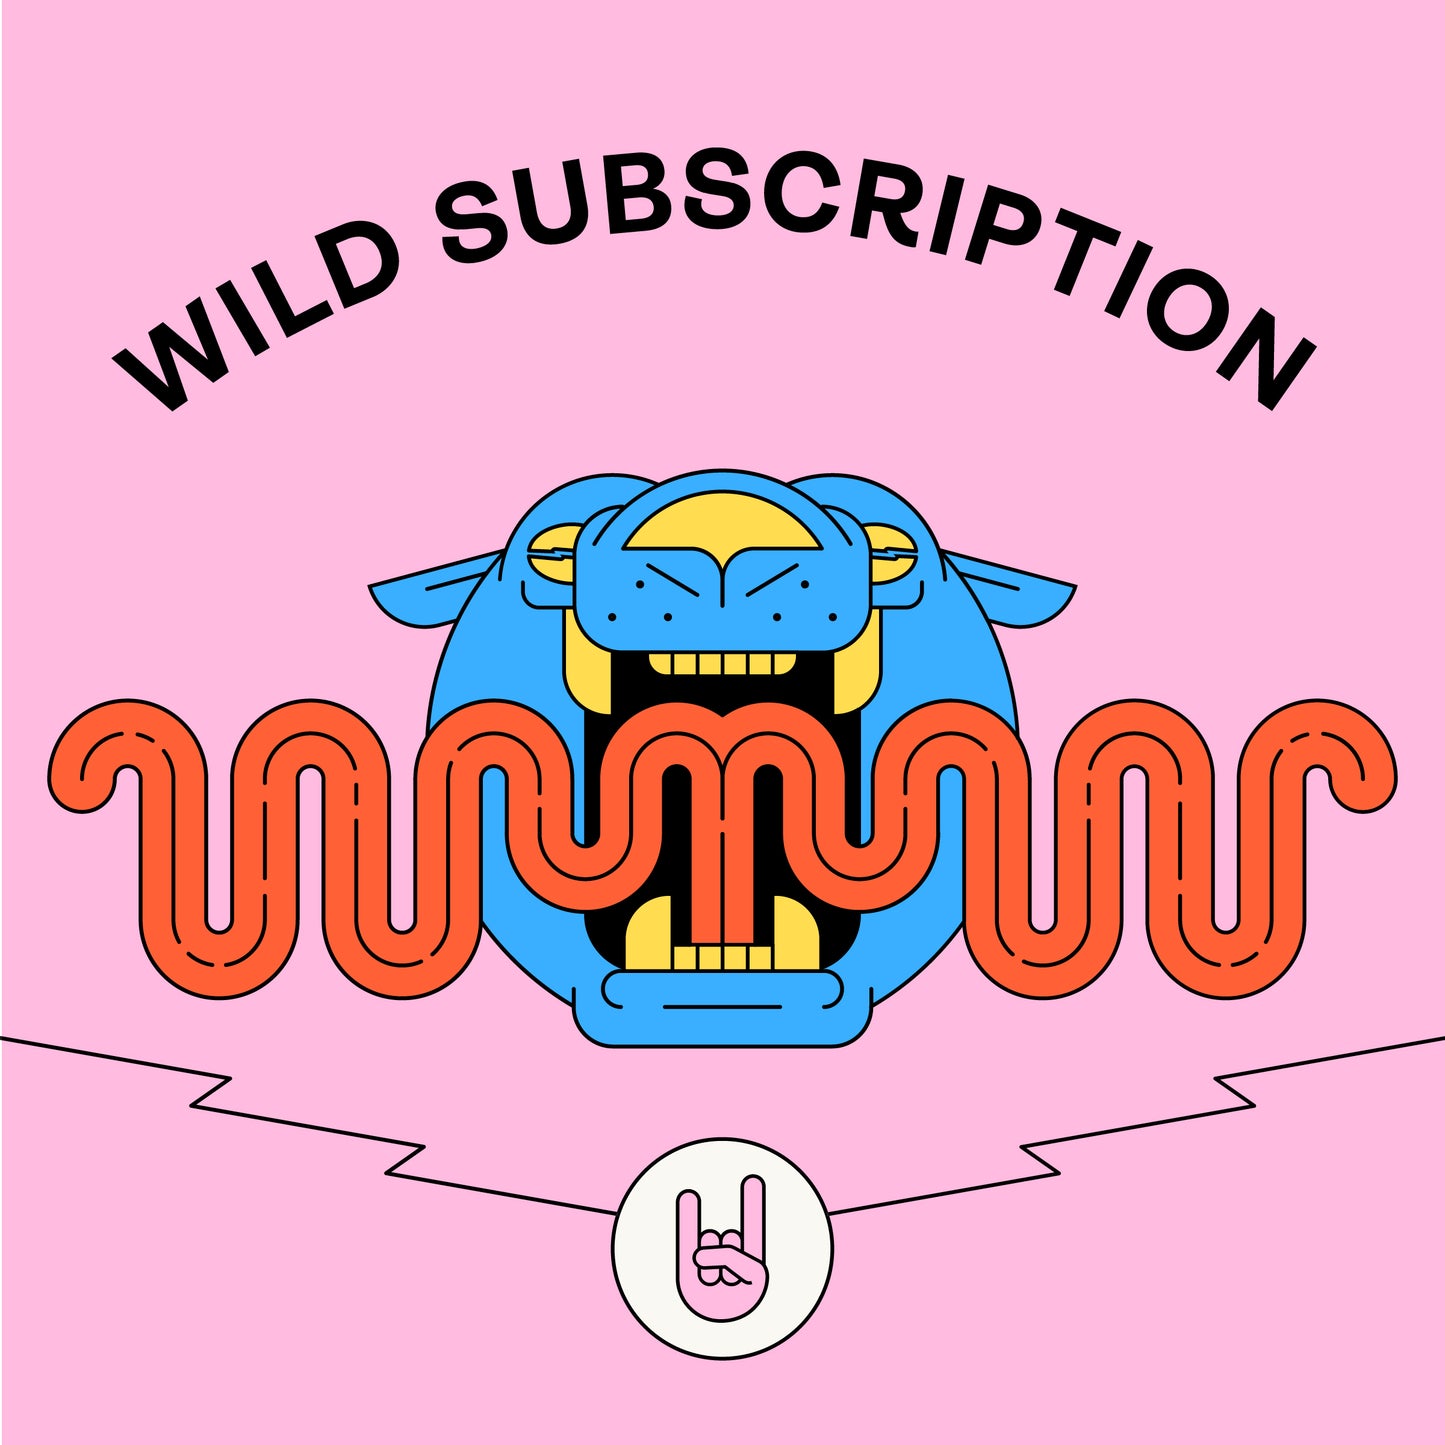 Wild Subscription